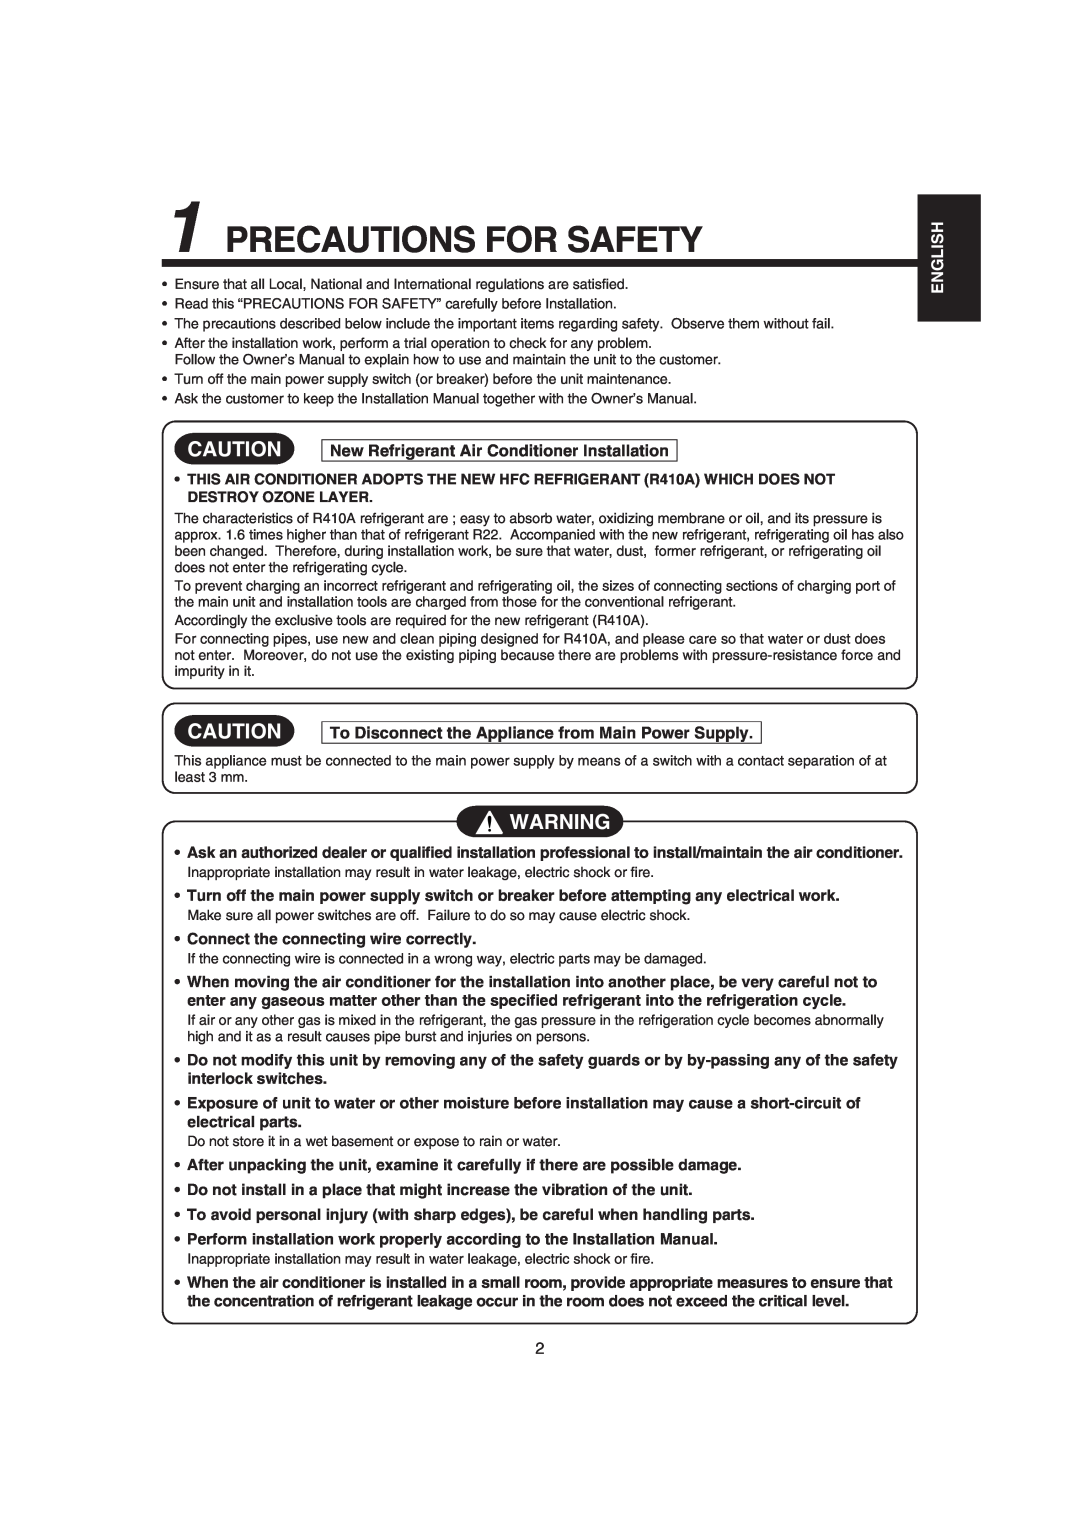 Pentax MMK-AP0071H, MMK-AP0121H, MMK-AP0181H Precautions For Safety, English, New Refrigerant Air Conditioner Installation 